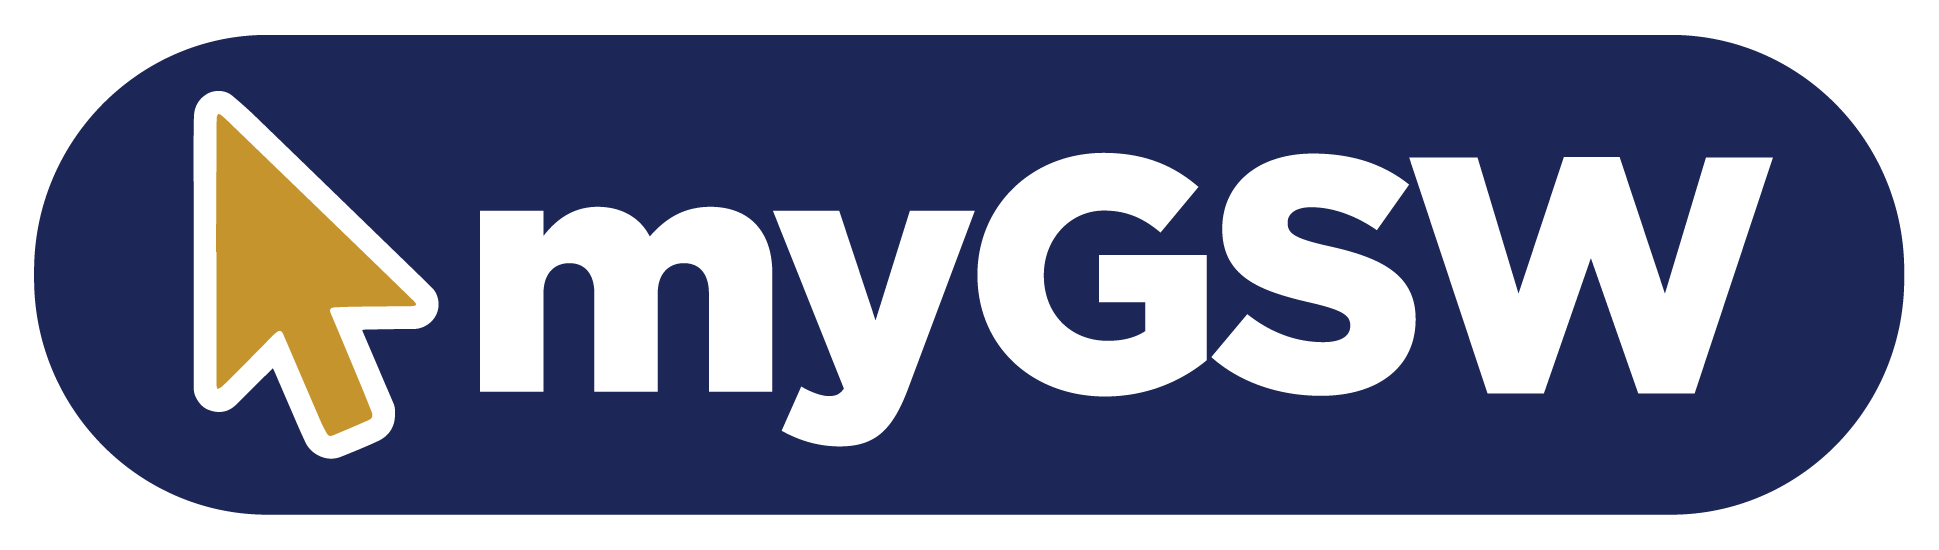 mygsw-logo.png